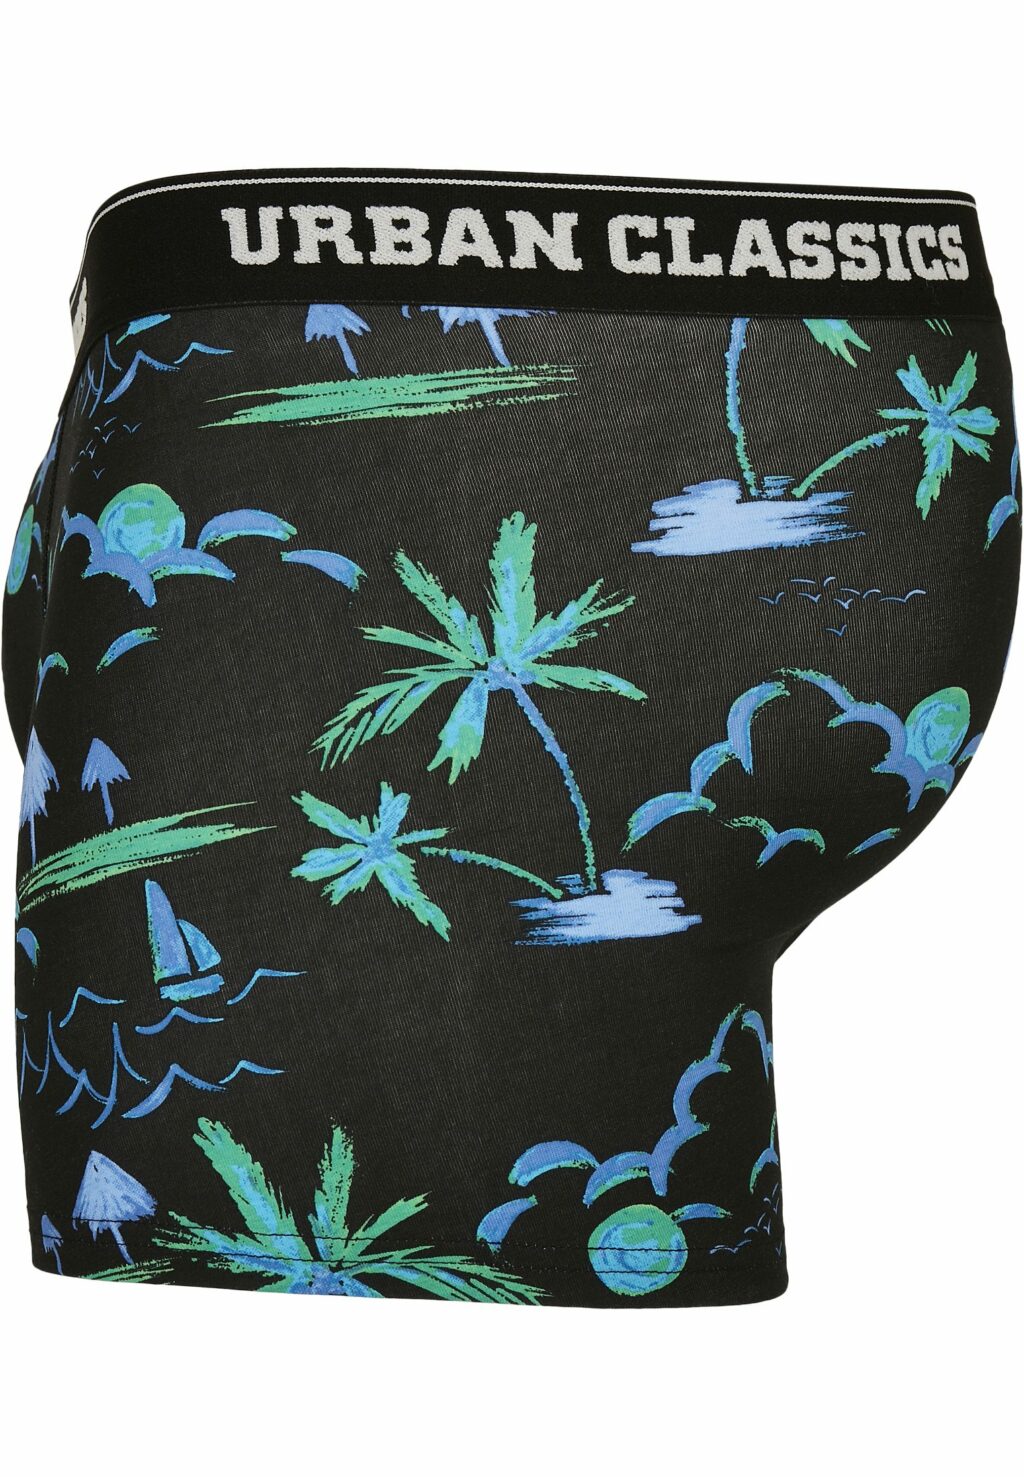 Urban Classics Boxer Shorts 3-Pack island aop/lime/grey TB3708